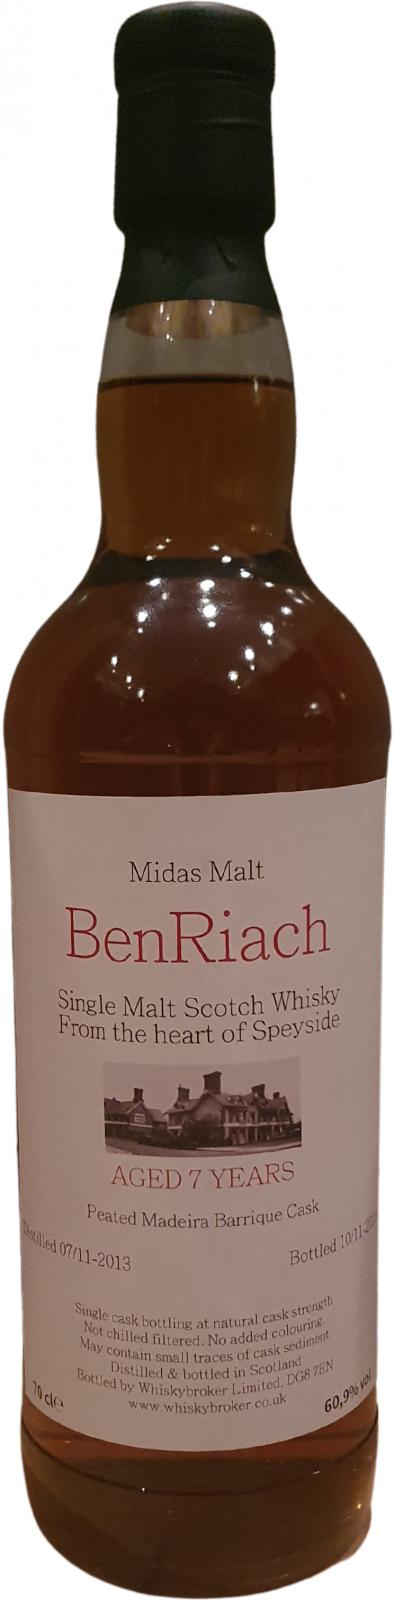 BenRiach 2013 F.dk Midas malt Peated Madeira Barrique 60.9% 700ml